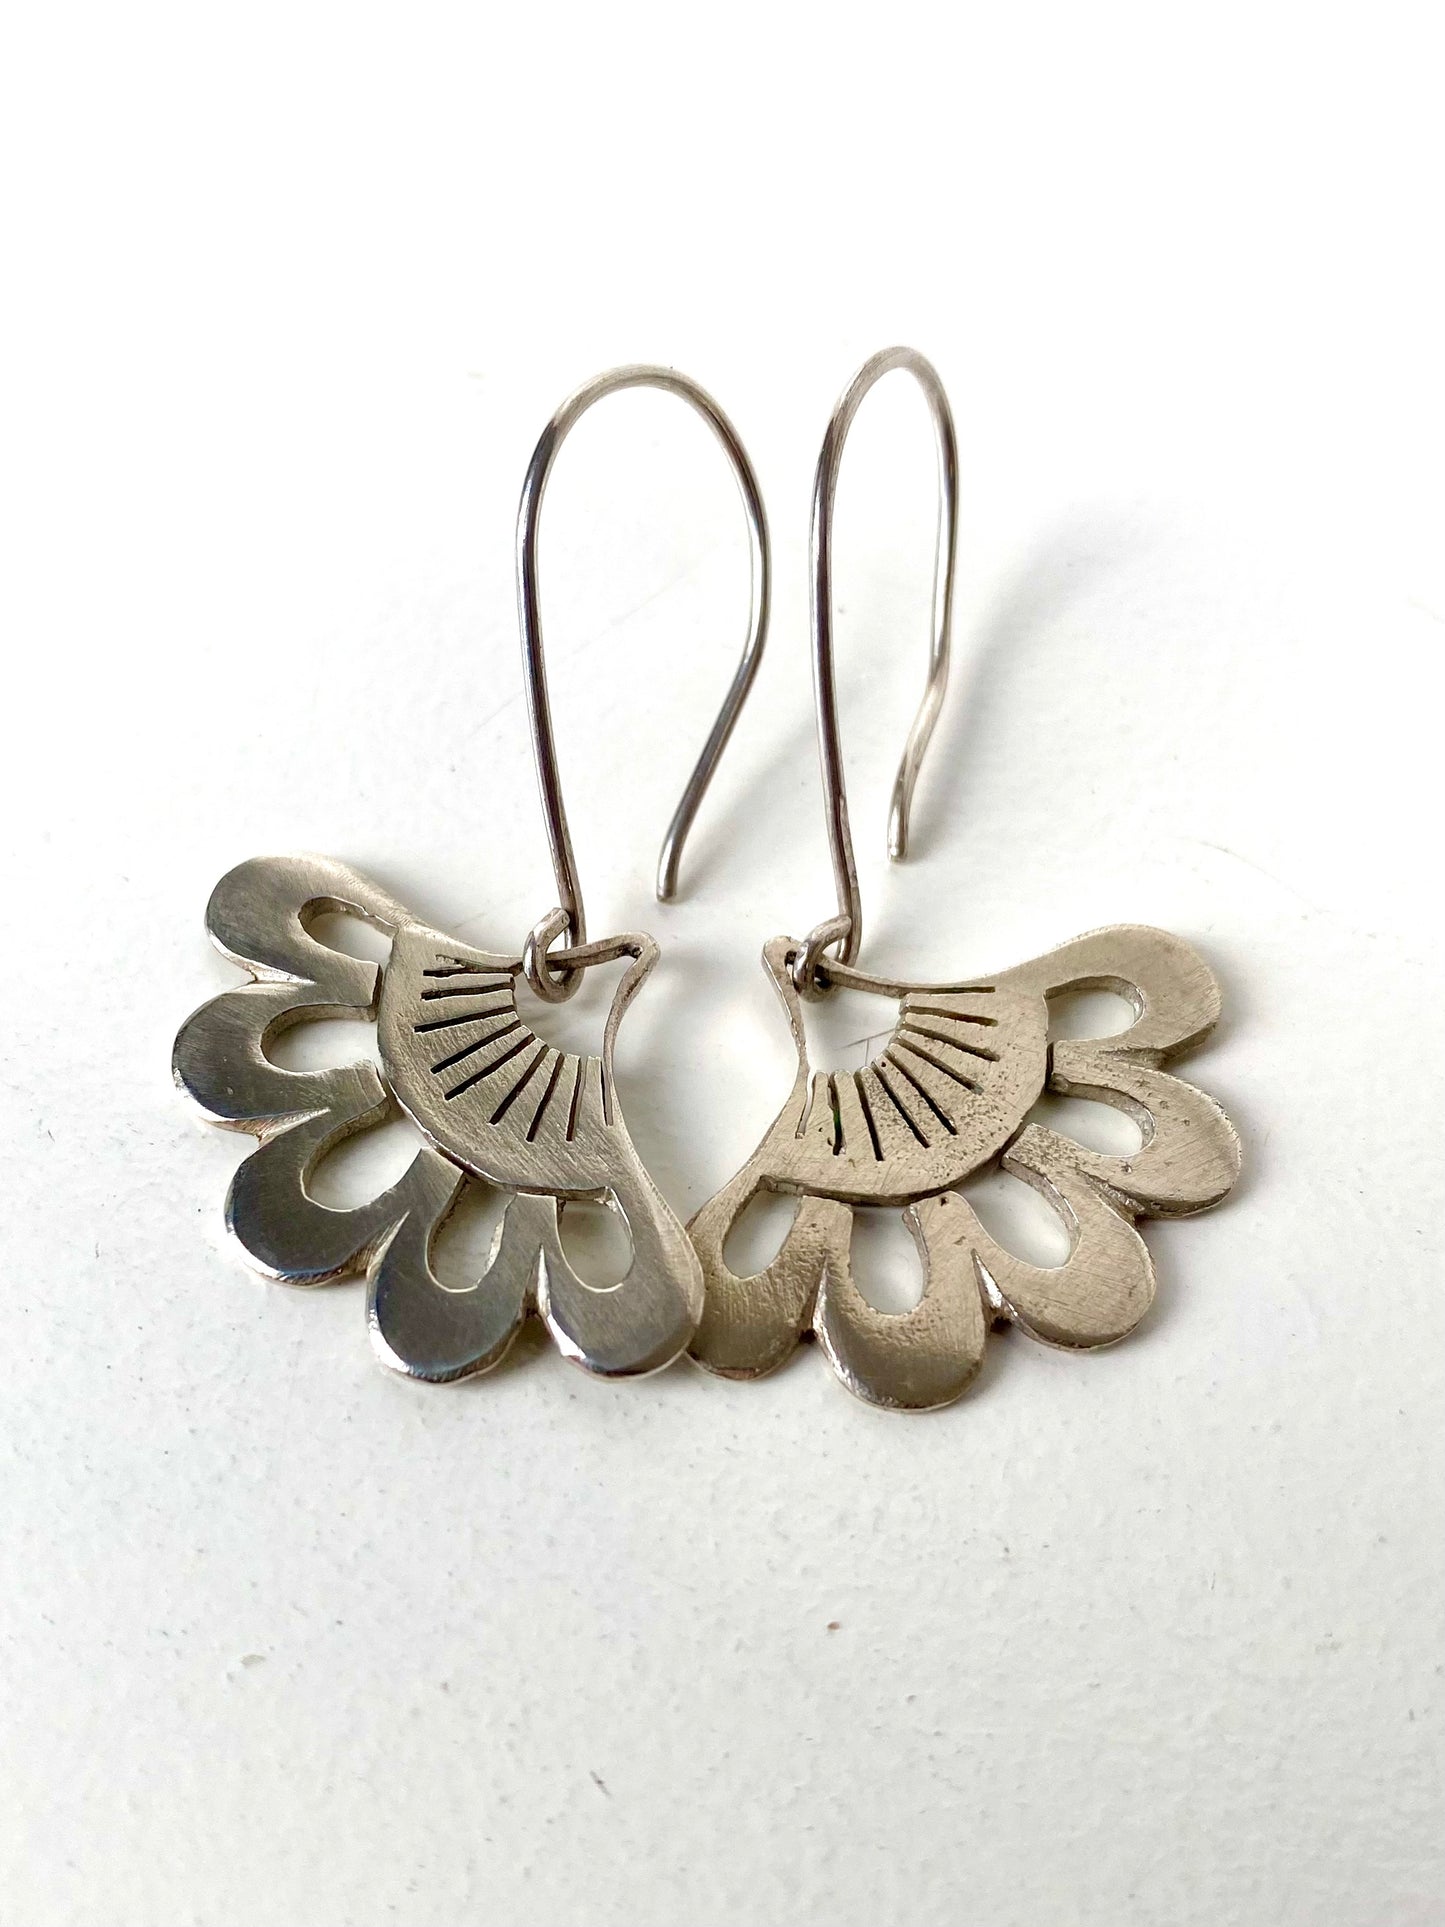 Lotus-Inspired Earrings in sterlin silver or brass